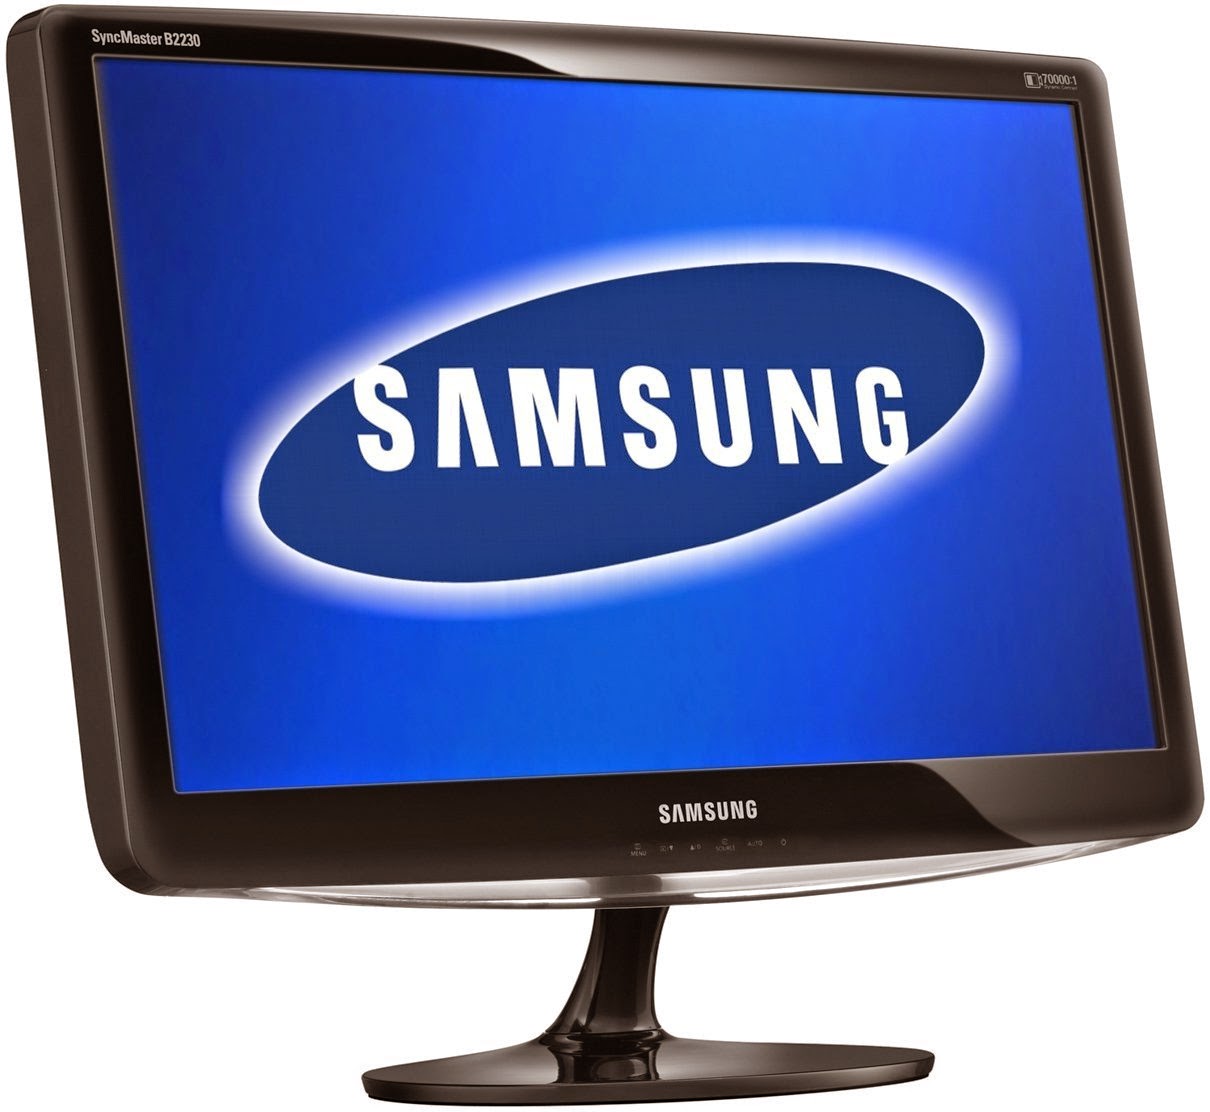 Samsung syncmaster ta350 software update